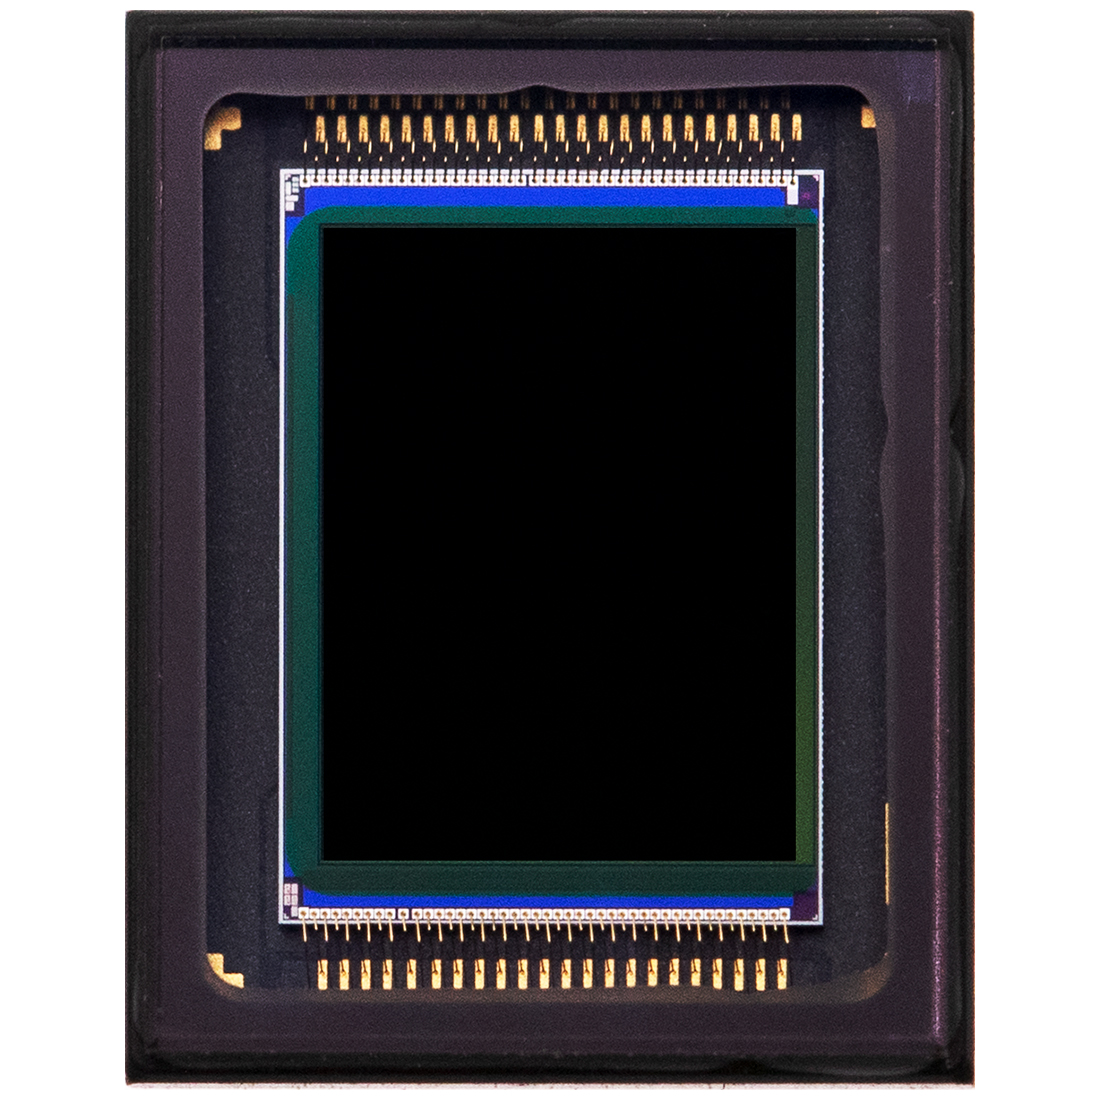 IMX577C IMX577-AACK 12MP SONY IMAGE CMOS SENSOR FOR ACTION  Color CAMERA,行动 运动 大疆 DJI GoPro航拍相机的图像传感器，背照堆栈式，Back-illuminated  stacked sensor，4k60fps，1080p240fps， 4K2K @60 frame